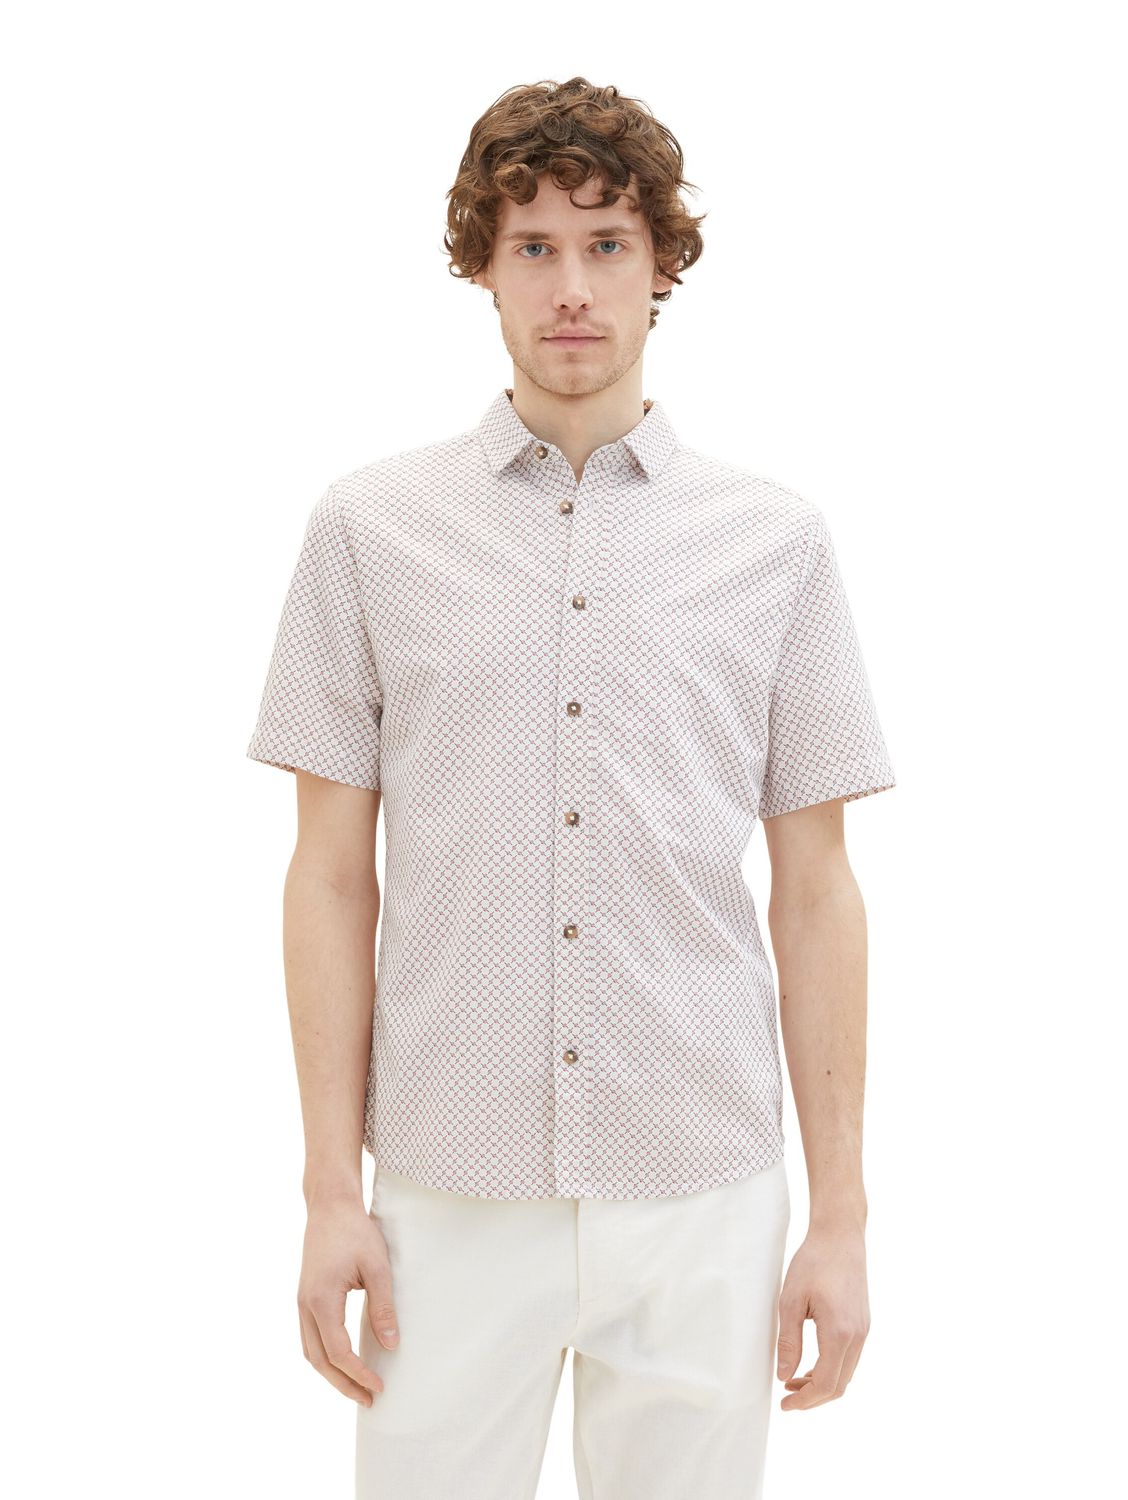 Рубашка Tom Tailor PRINTED, разноцветный рубашка tom tailor fitted printed белый